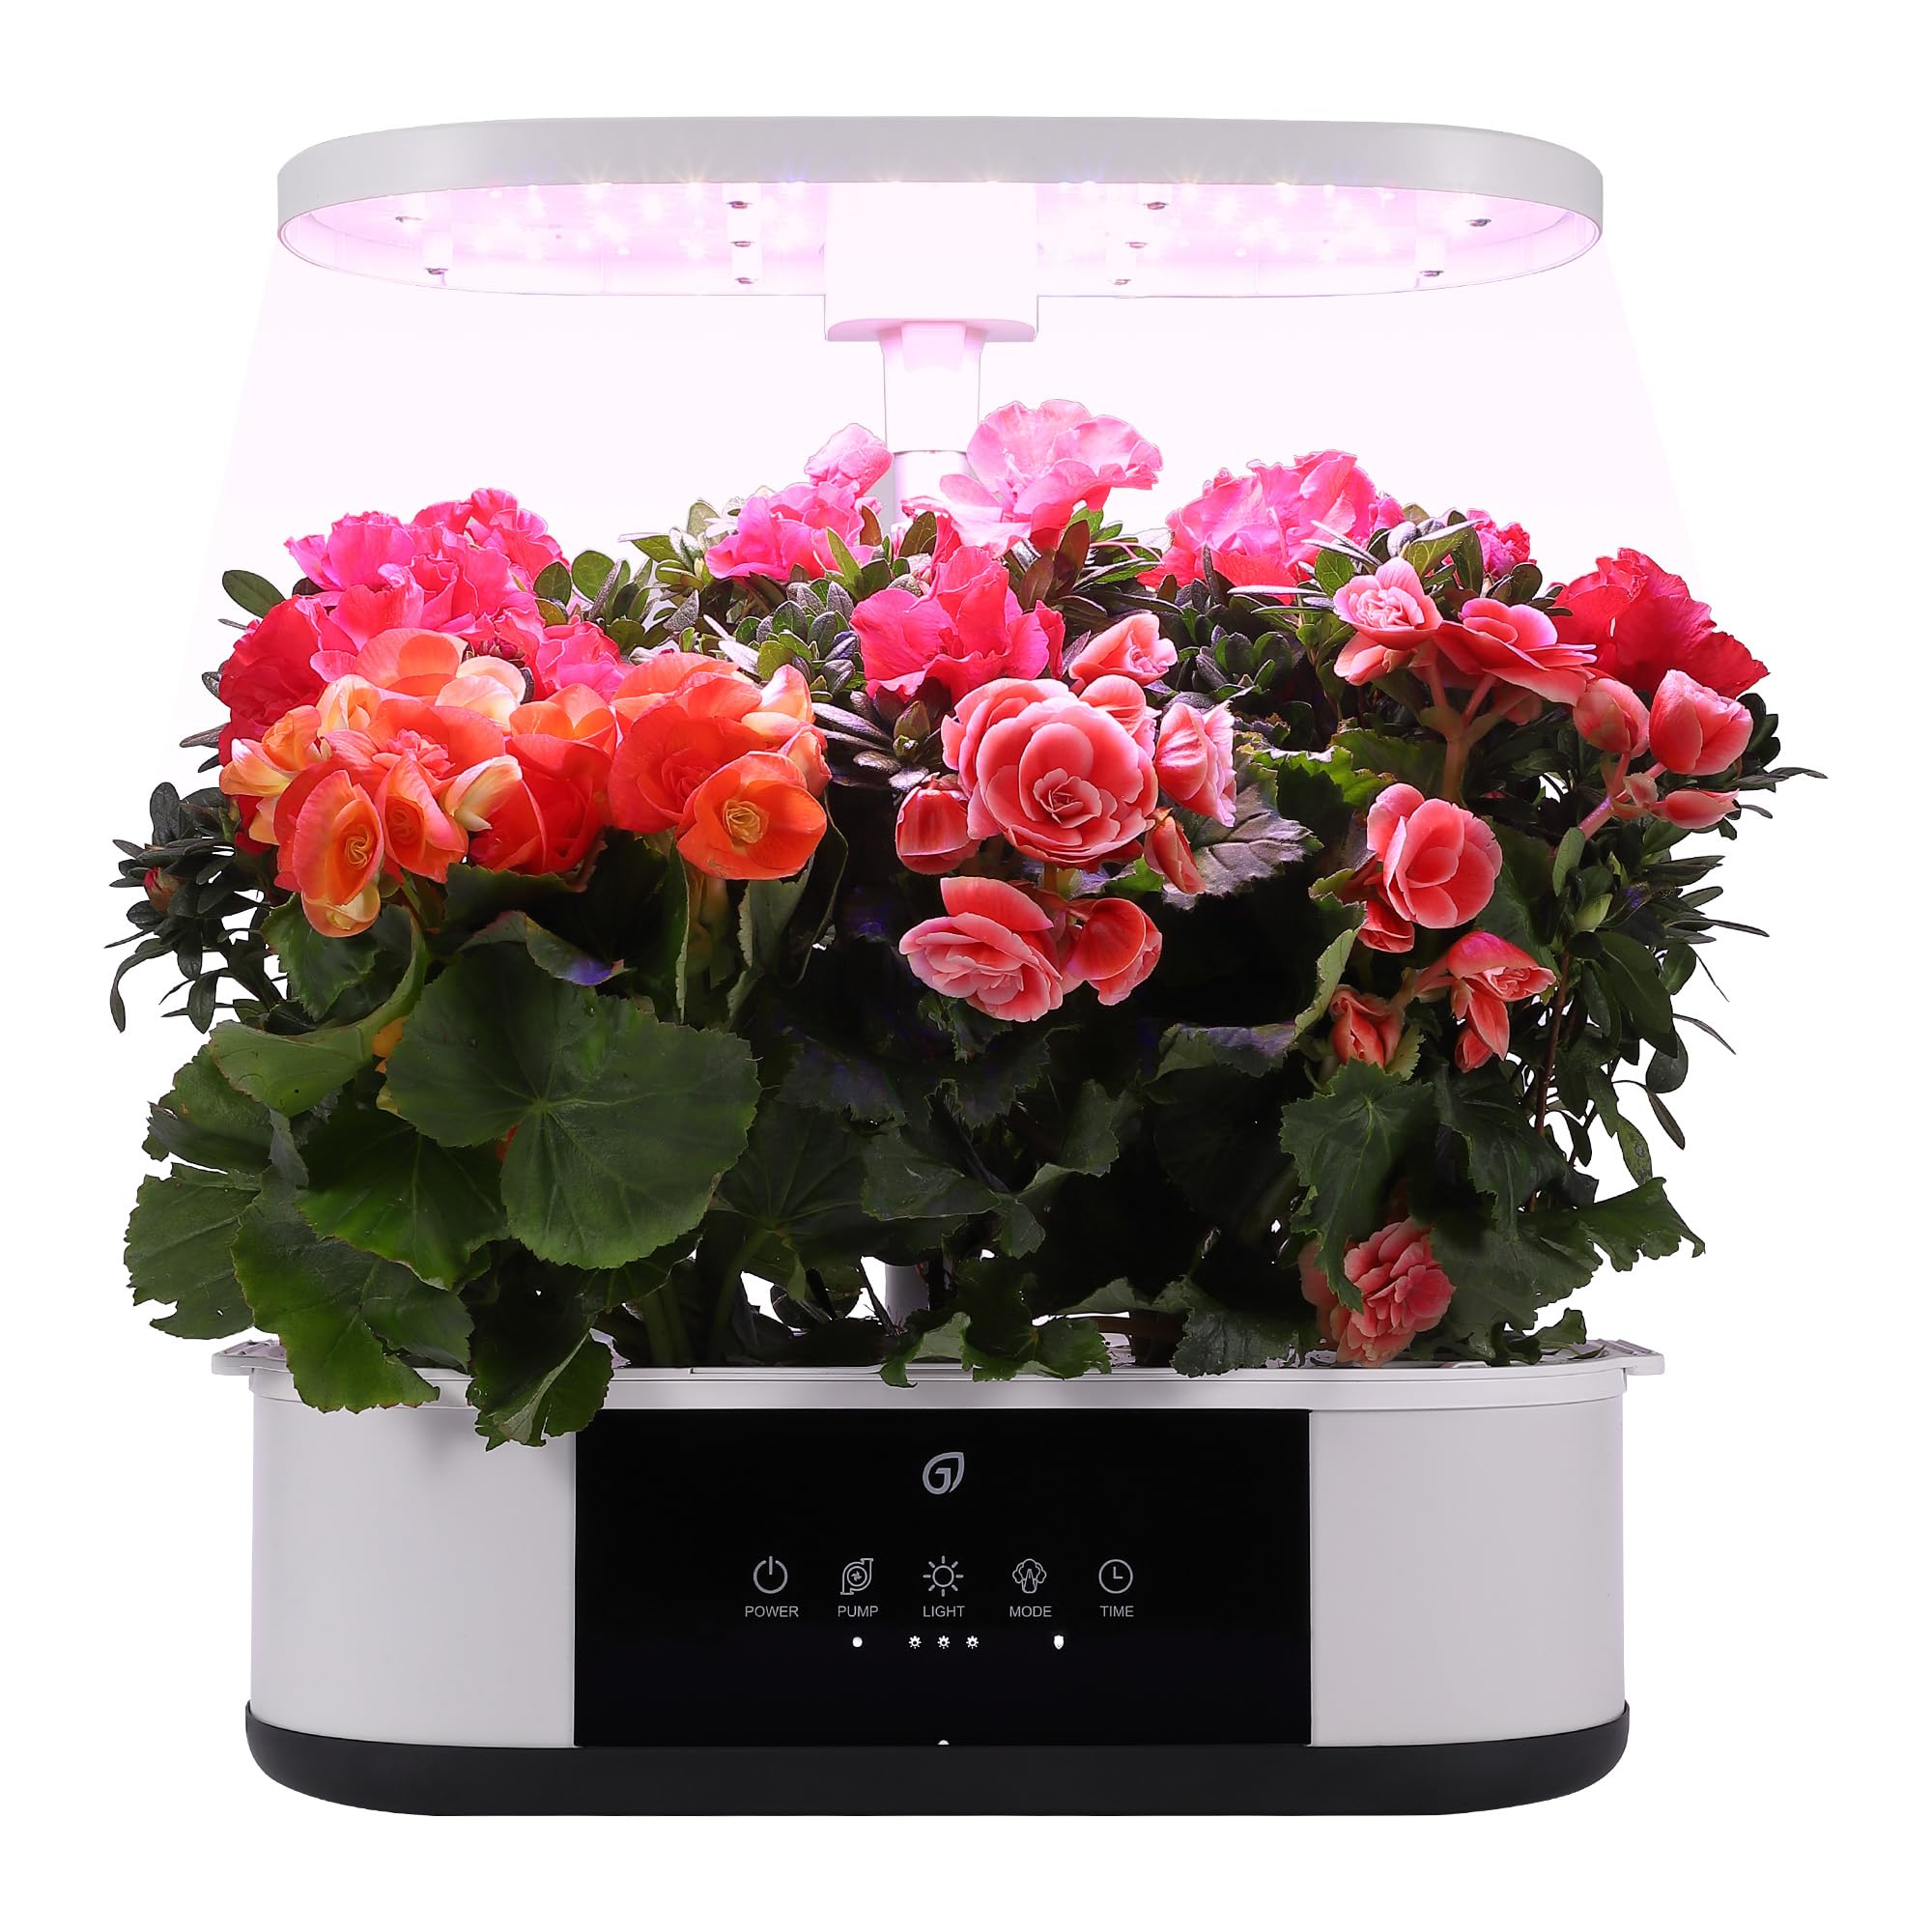 12 Pods Hydroponics LED Growing Indoor Garden $30 @ Amazon